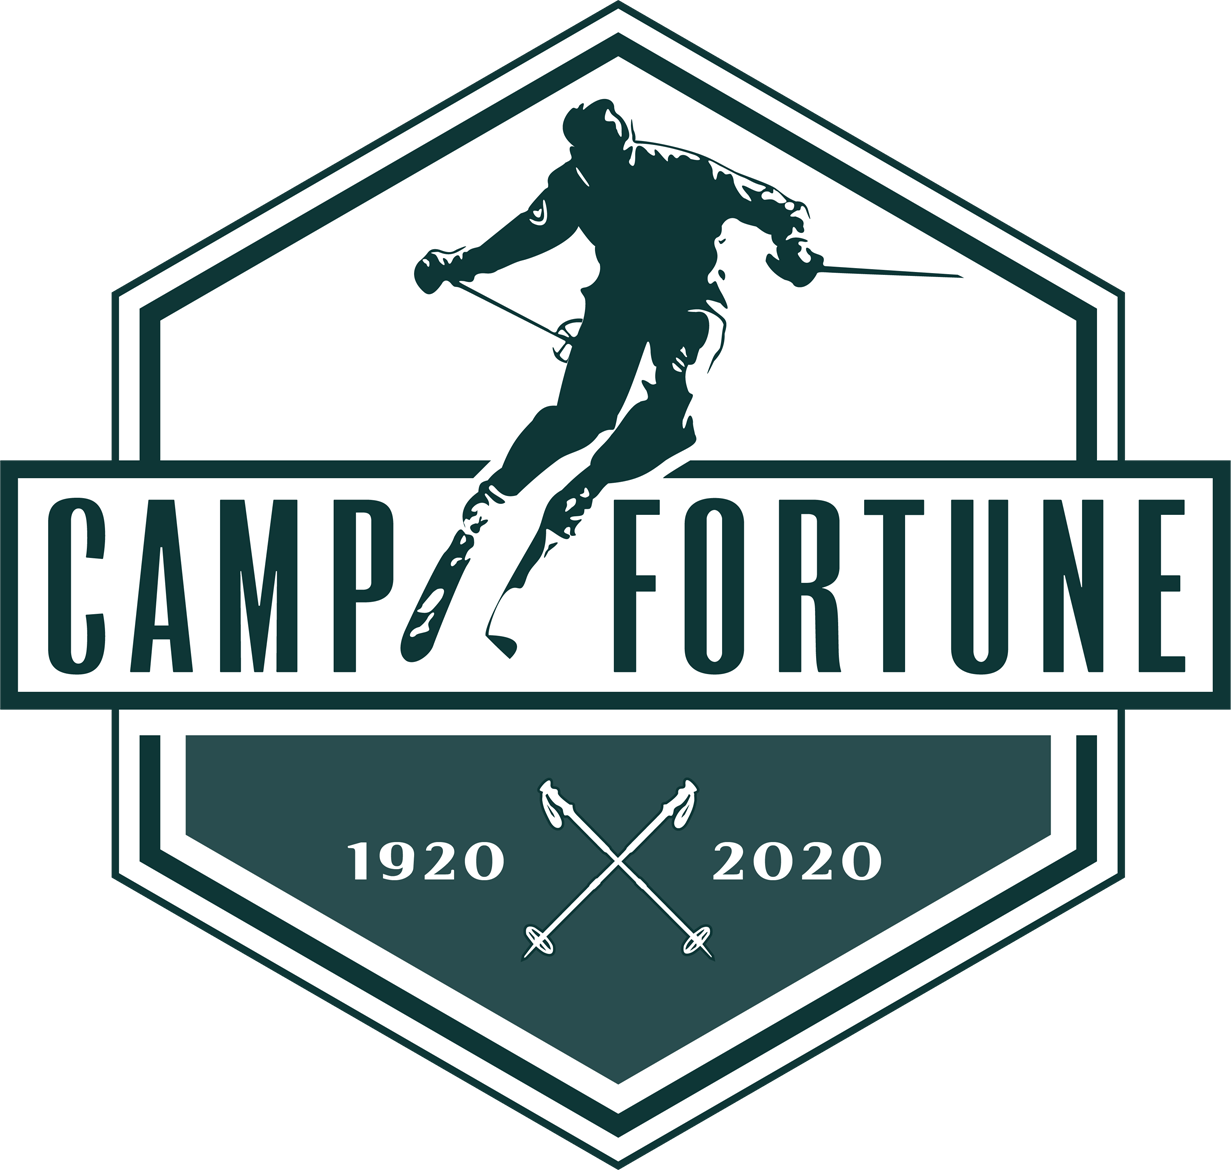 Camp Fortune logo